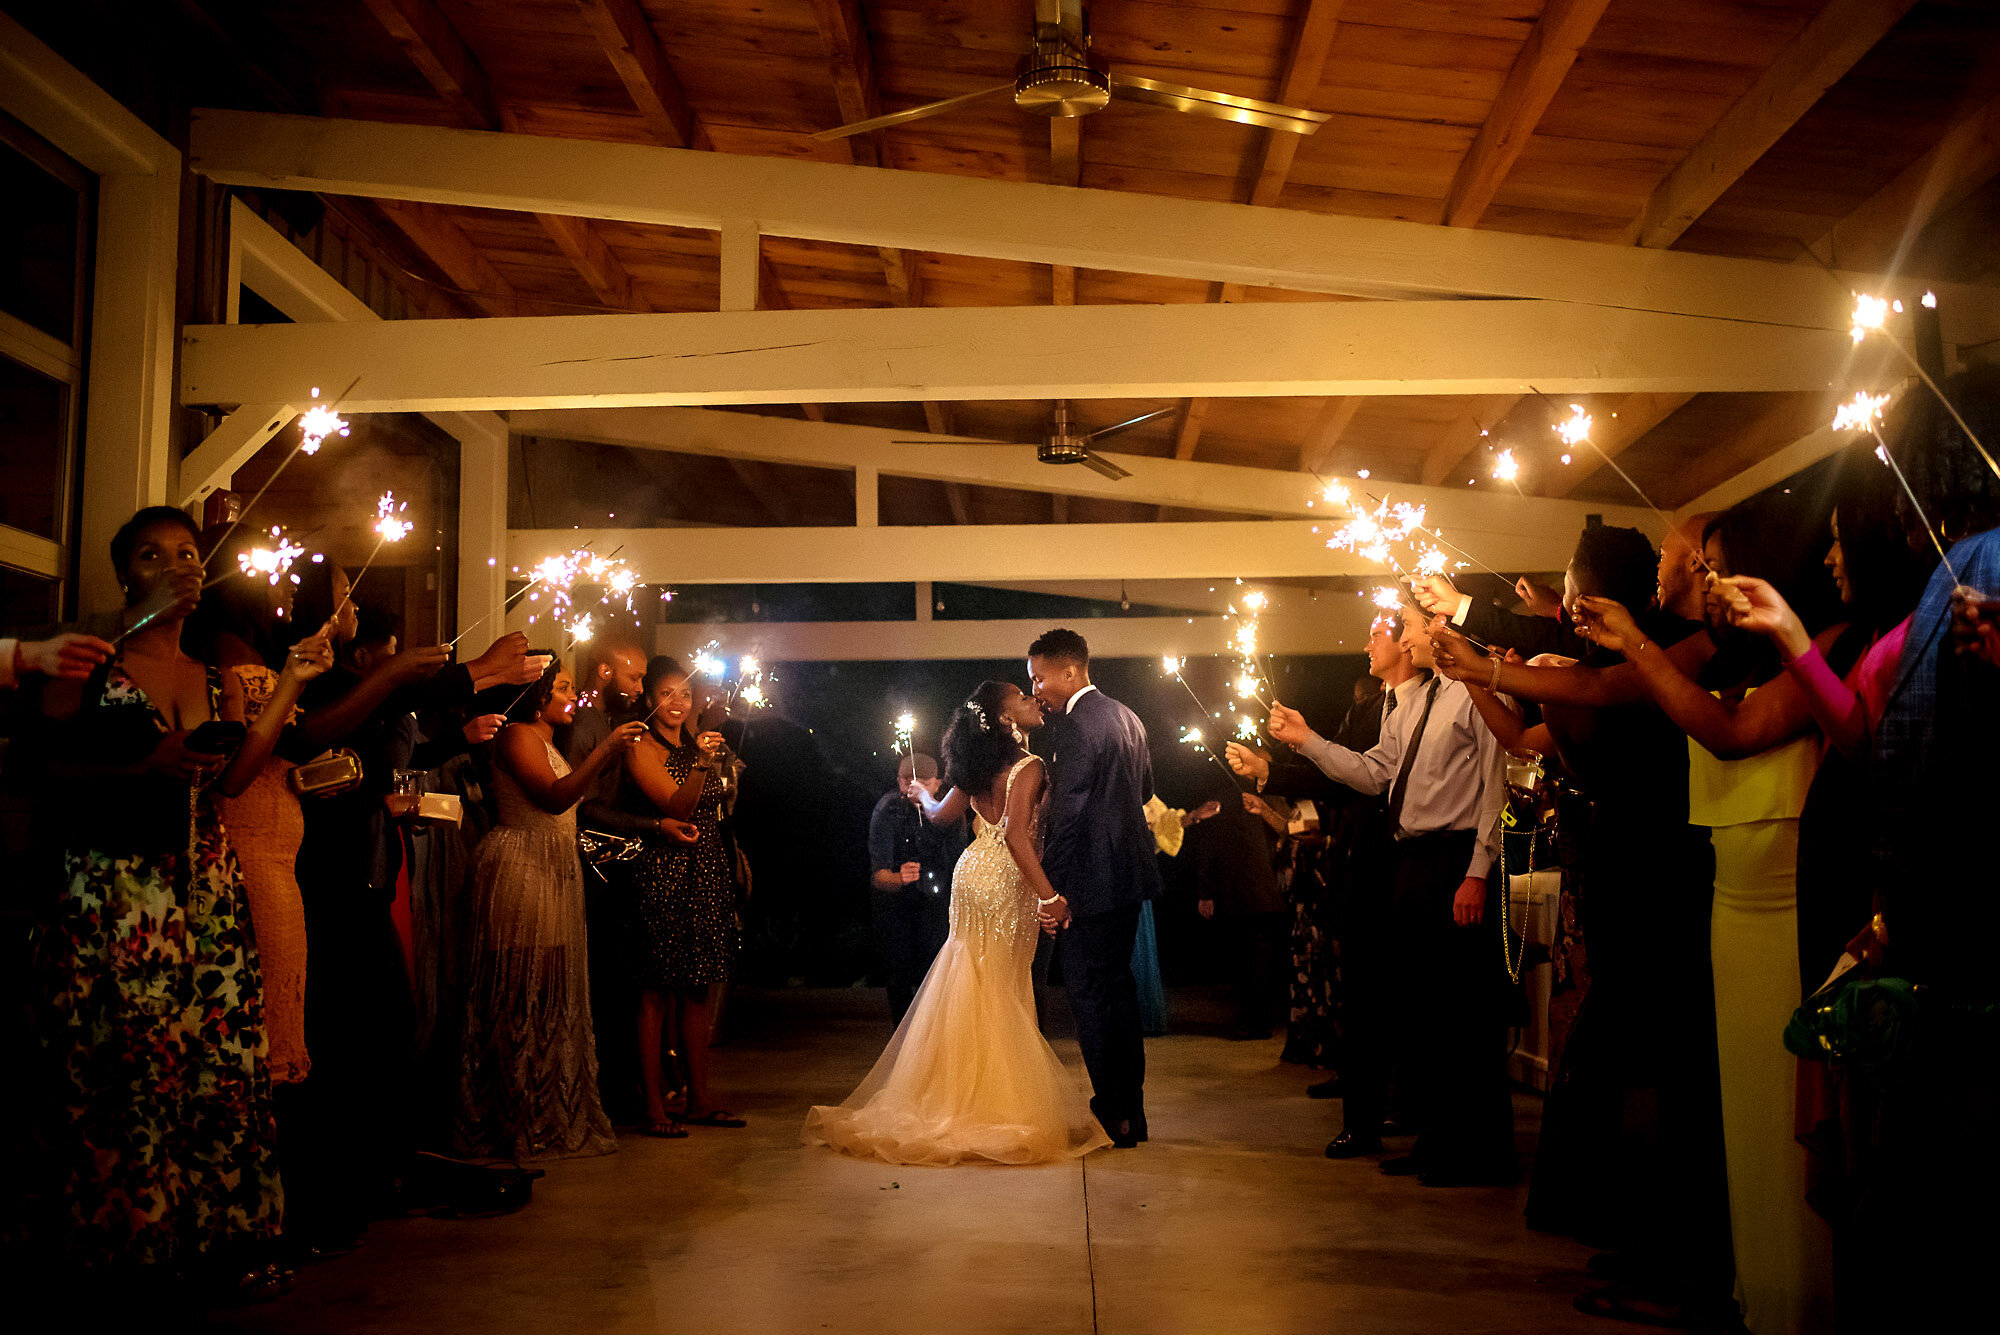 73-Austin-wedding-photographer-Jide-Alakija-couples exit with sparklers.jpg.JPG